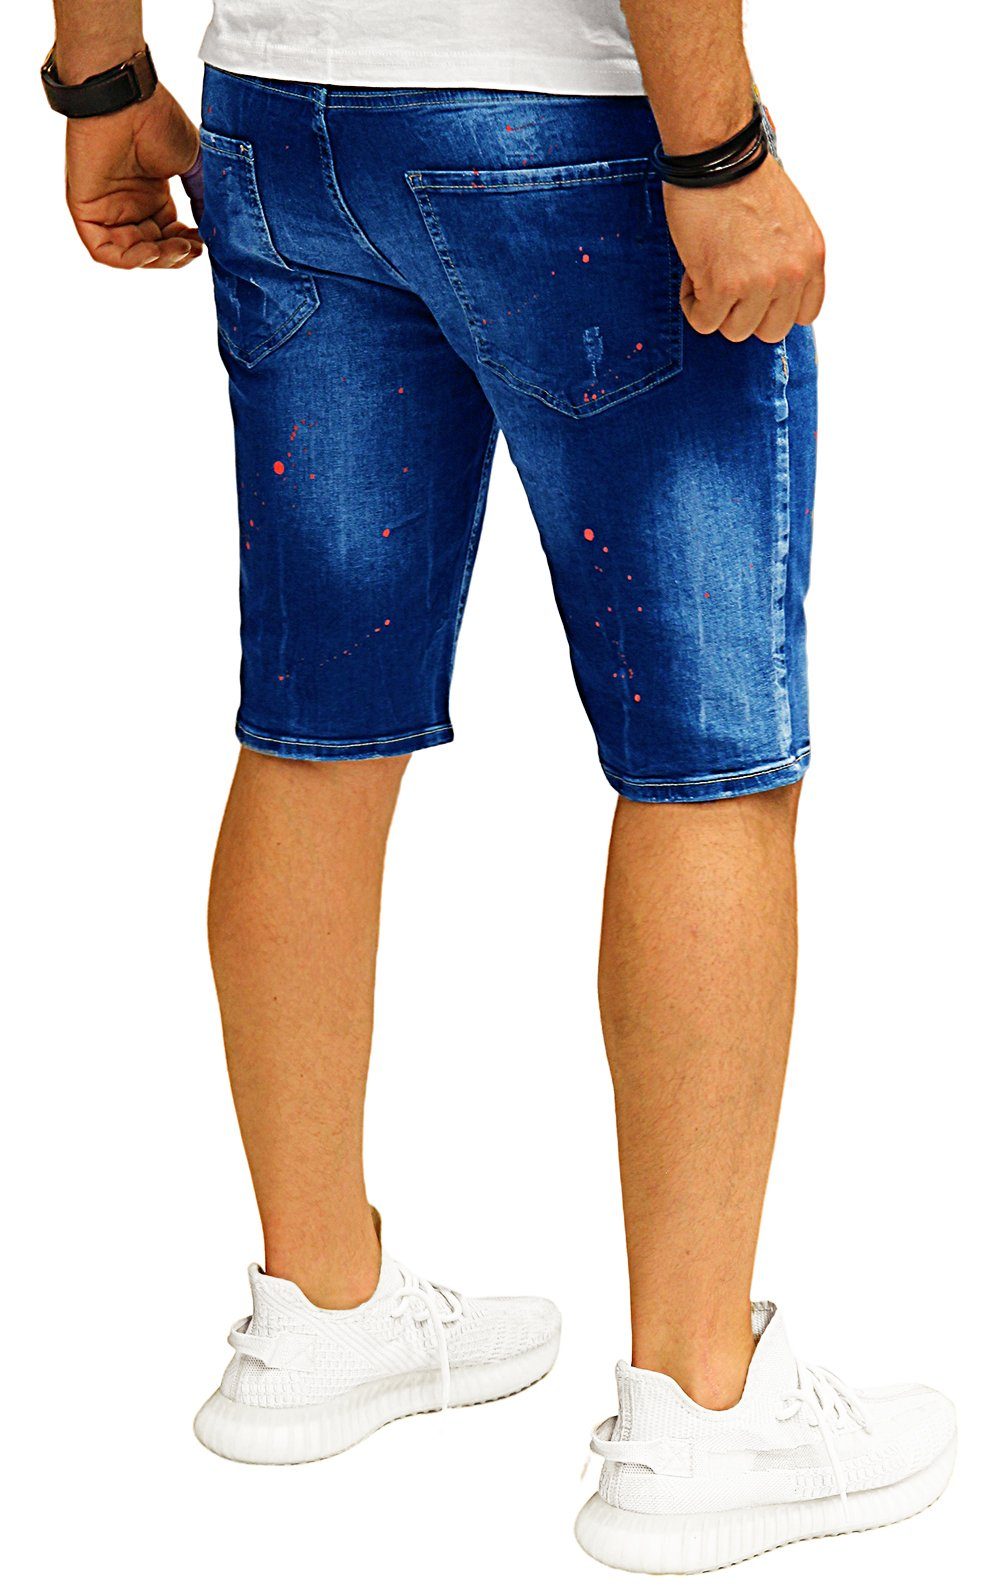 (B.702) mit Jeansshorts Farbspritzern Blue Pocket 5 short Blau RMK Jeans